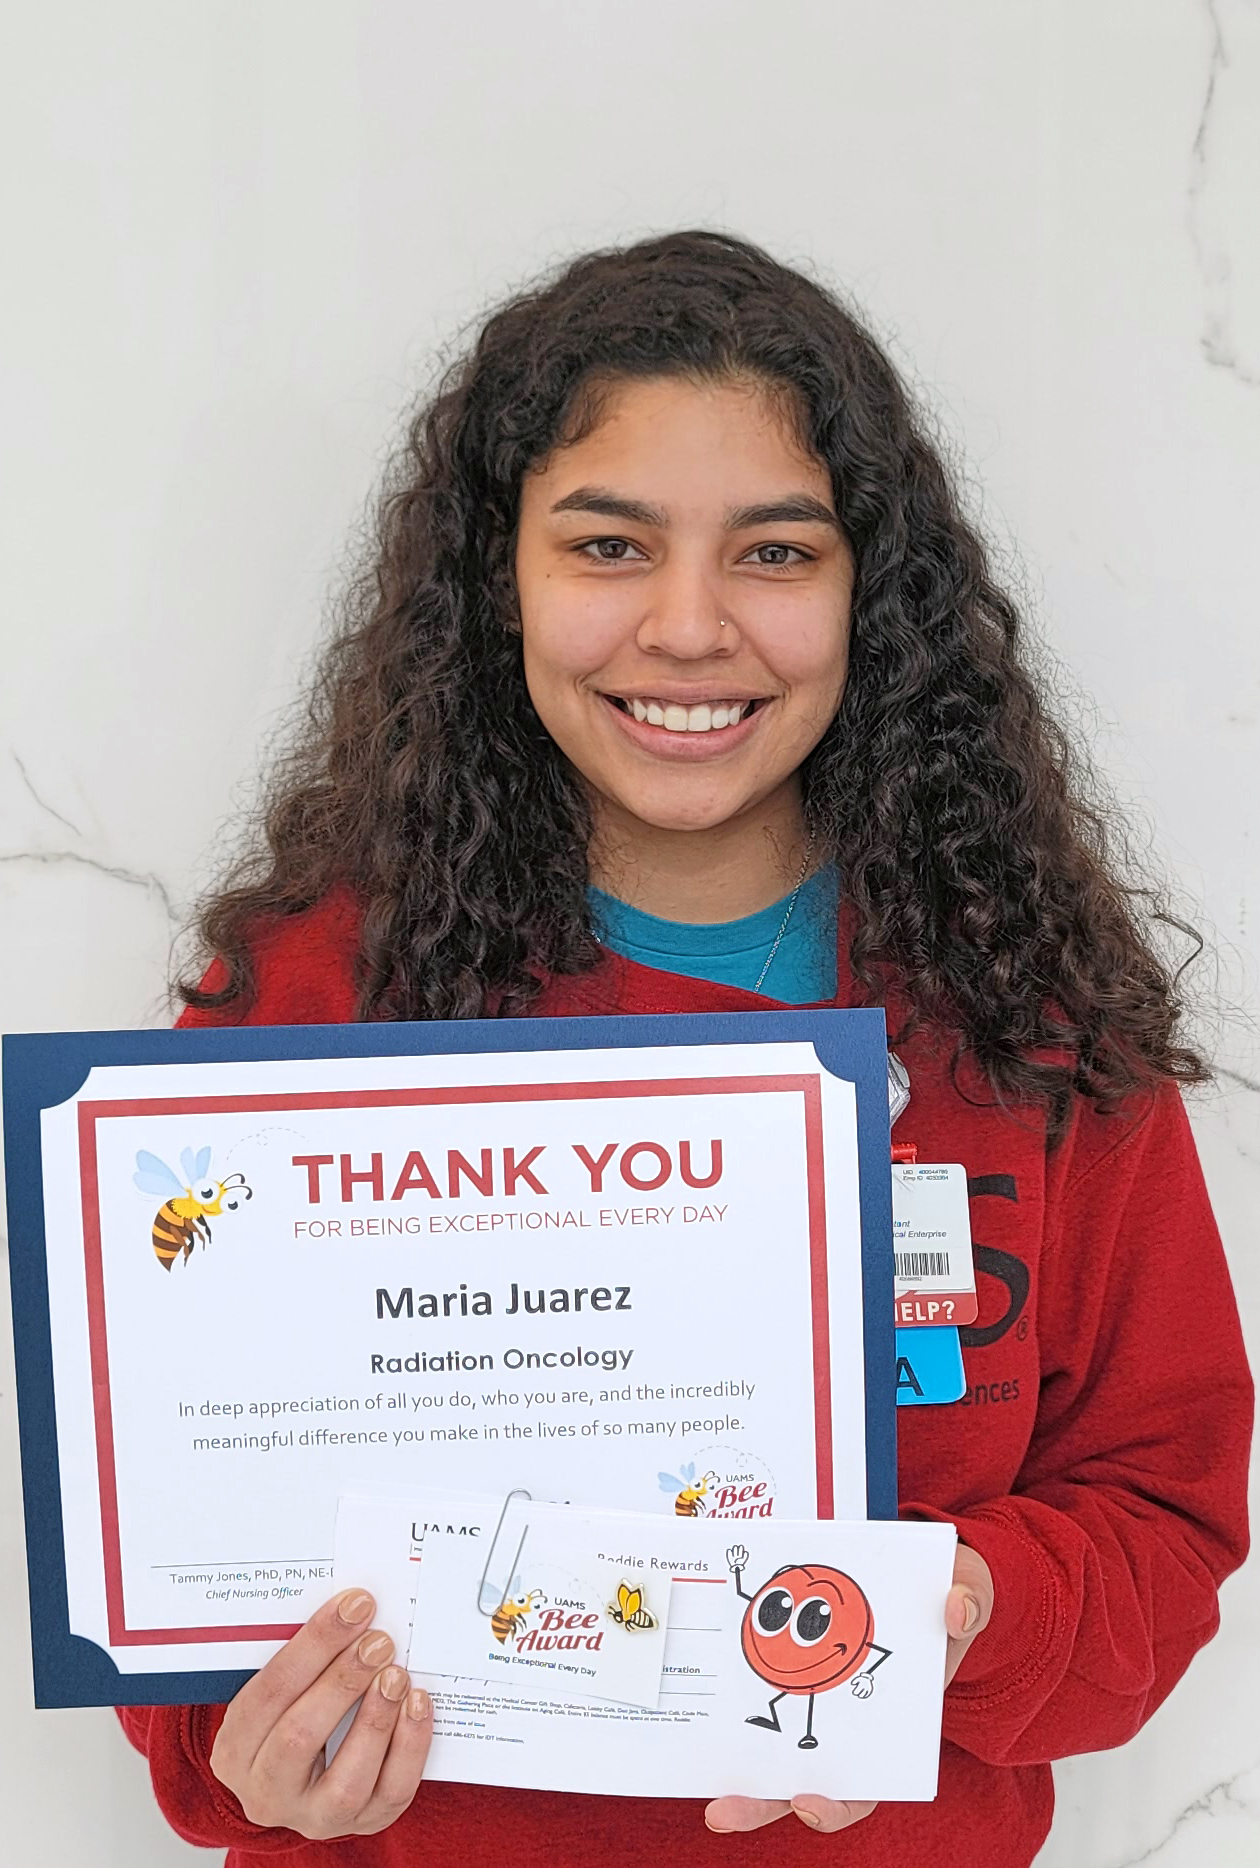 Maria Juarez, Medical Assistant, Radiation Oncology